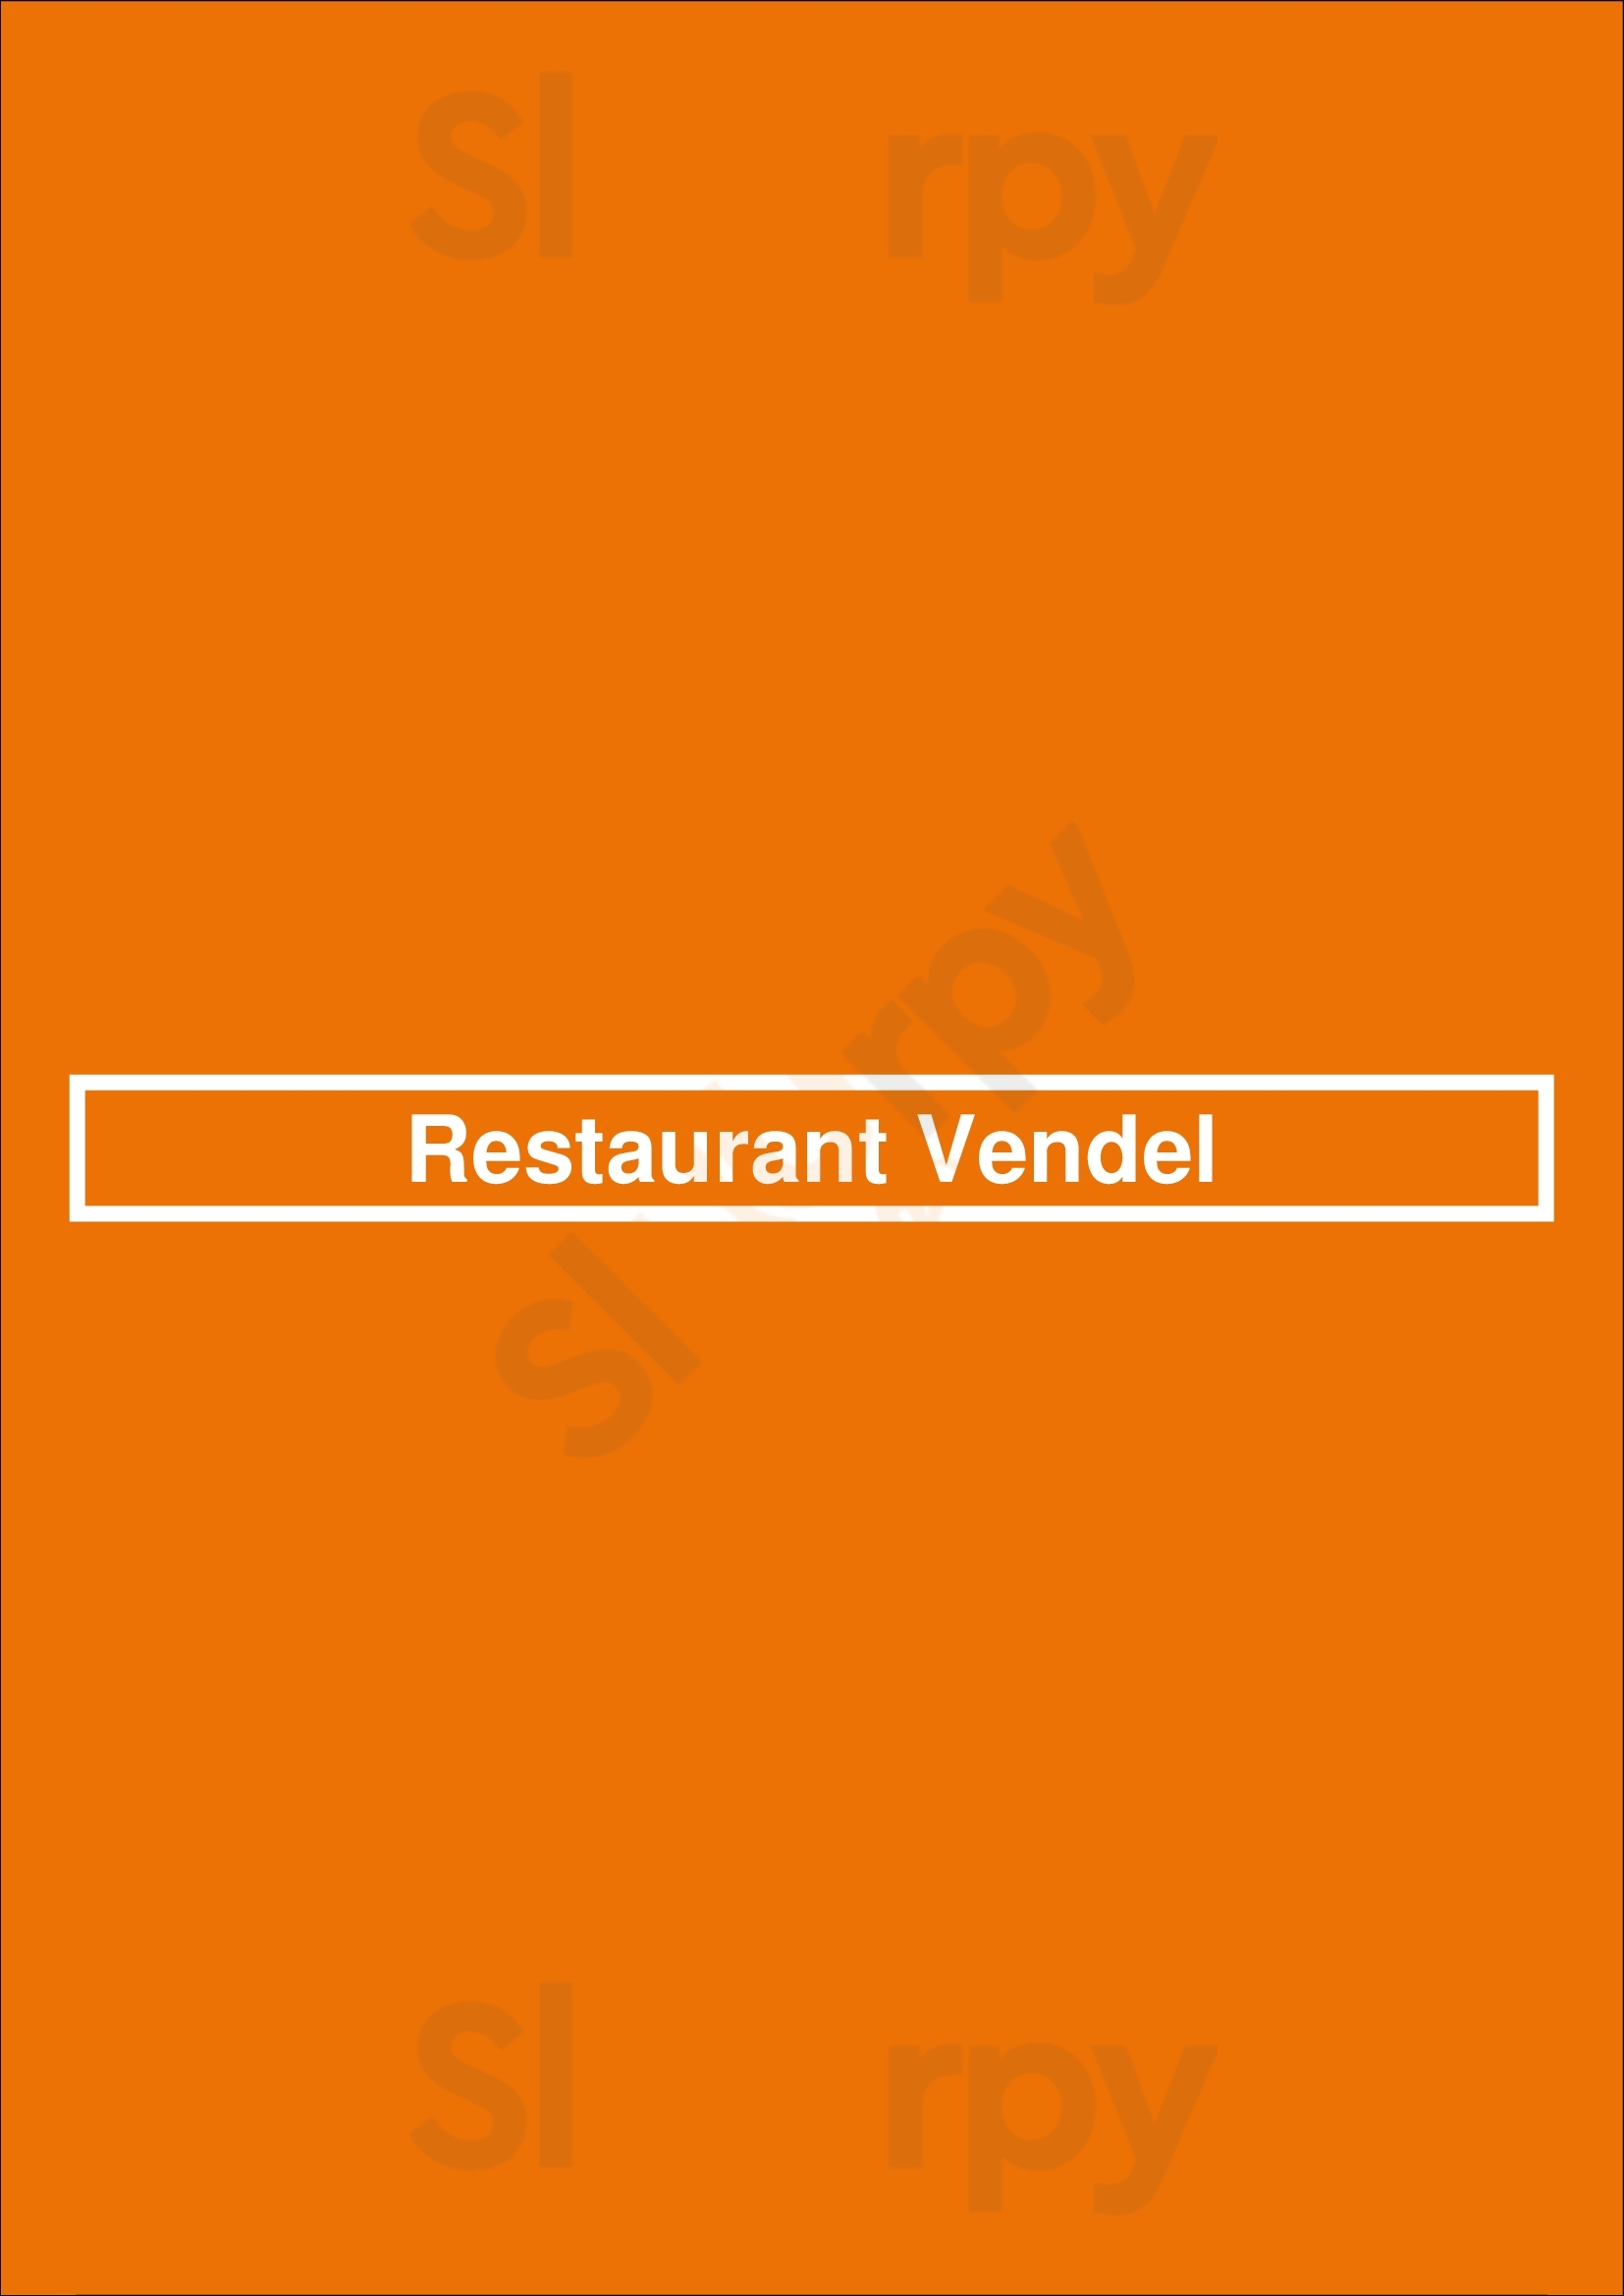 Restaurant Vendel Veenendaal Menu - 1